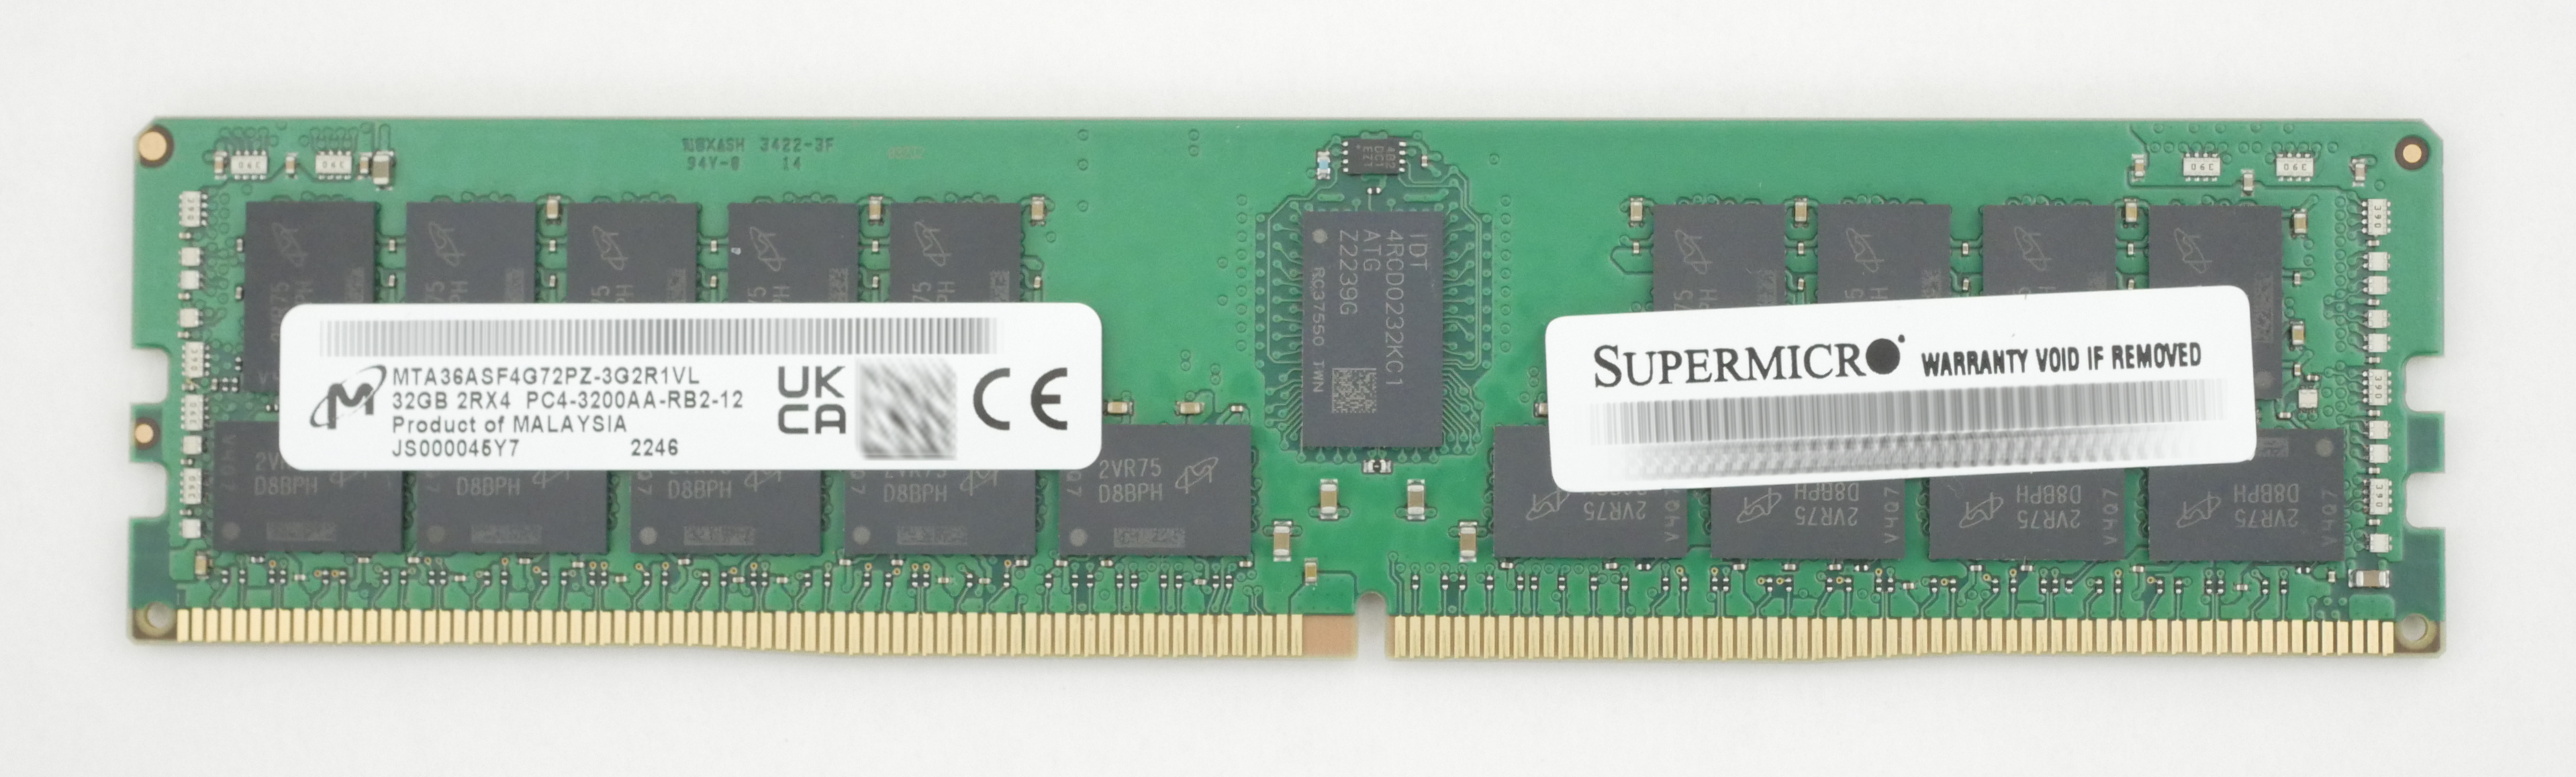 Supermicro 32GB PC4-3200AA-RB2-12 Server Memory MTA36ASF4G72PZ-3G2R1